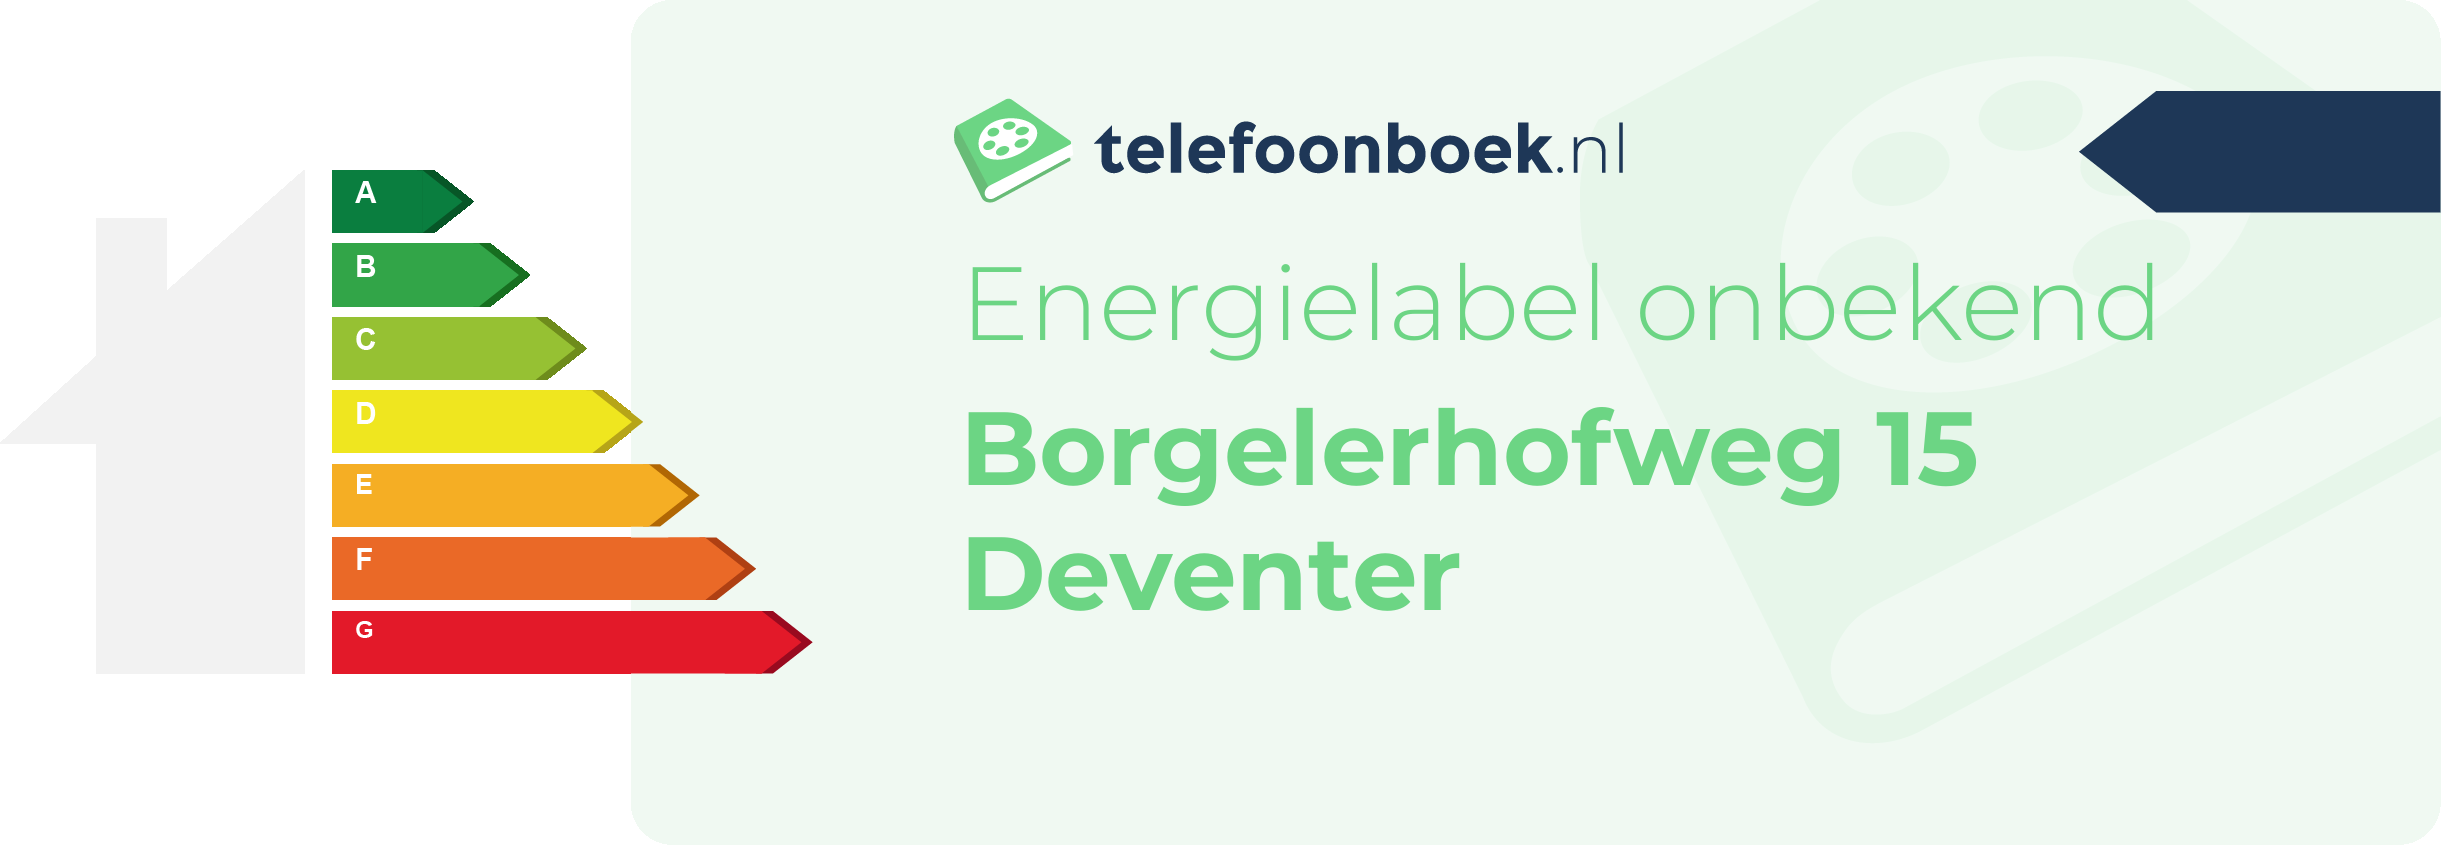 Energielabel Borgelerhofweg 15 Deventer